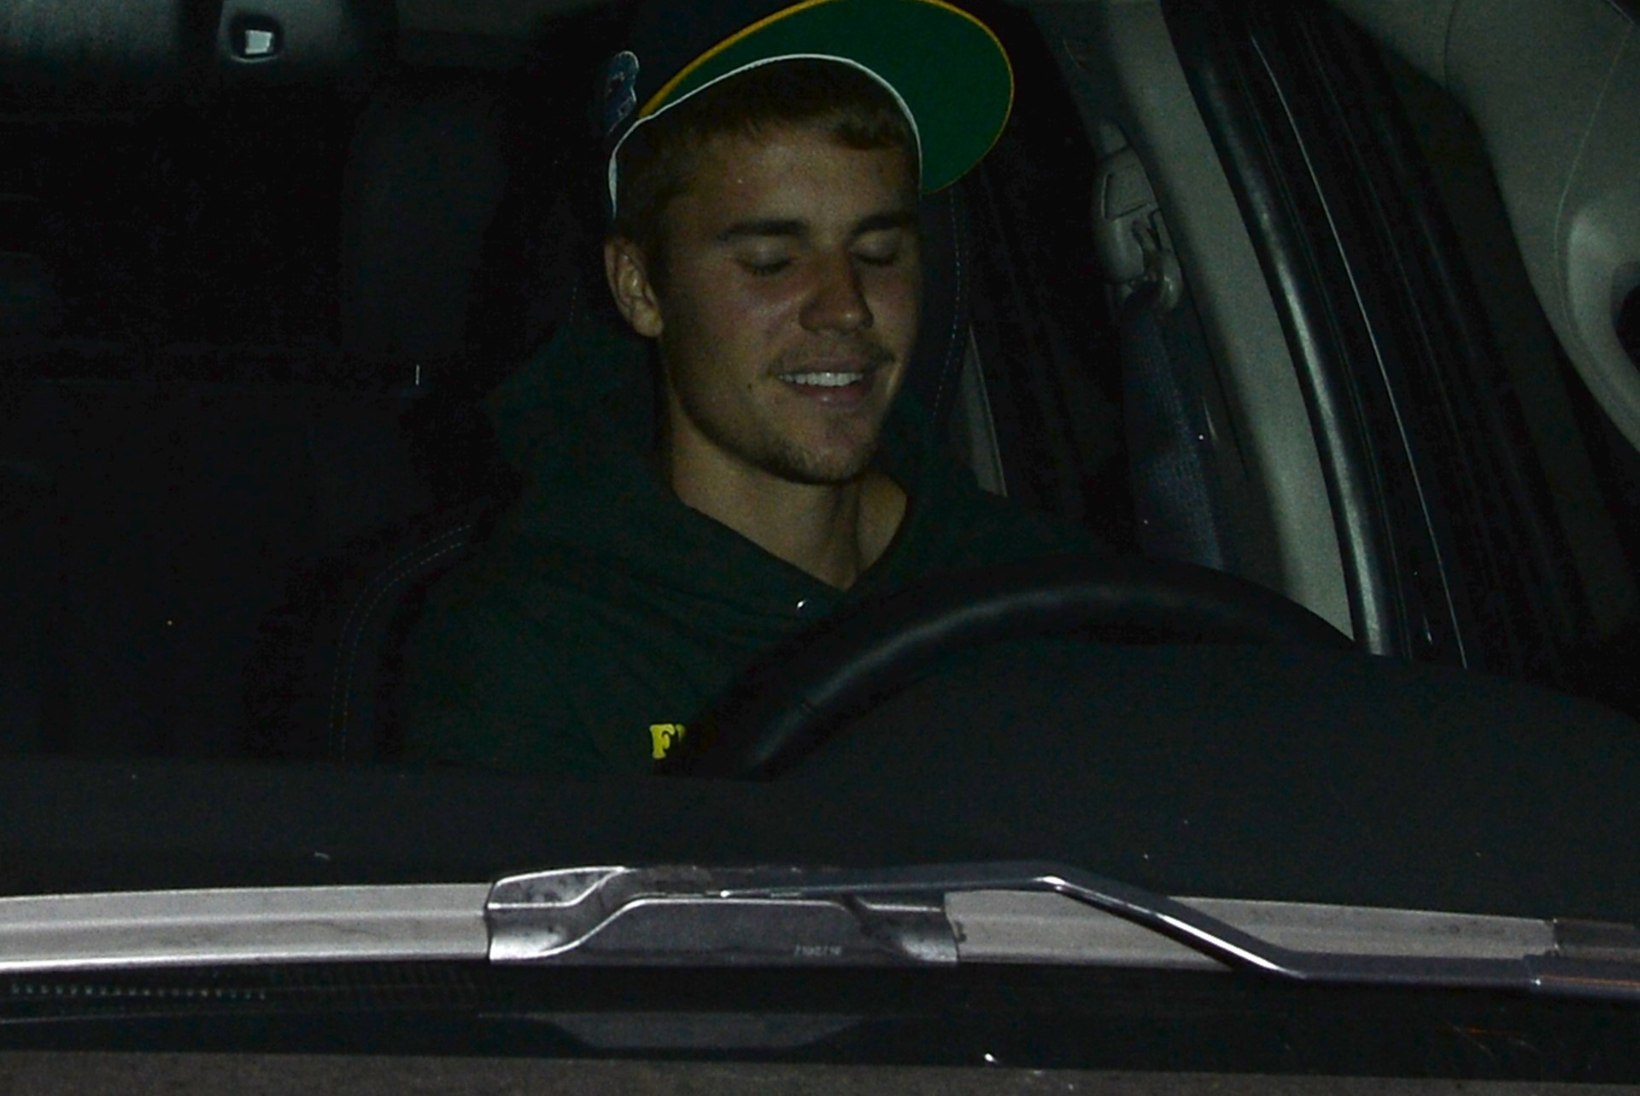 FOTOD | Justin Bieber sõitis kirikust tulles paparatsole otsa